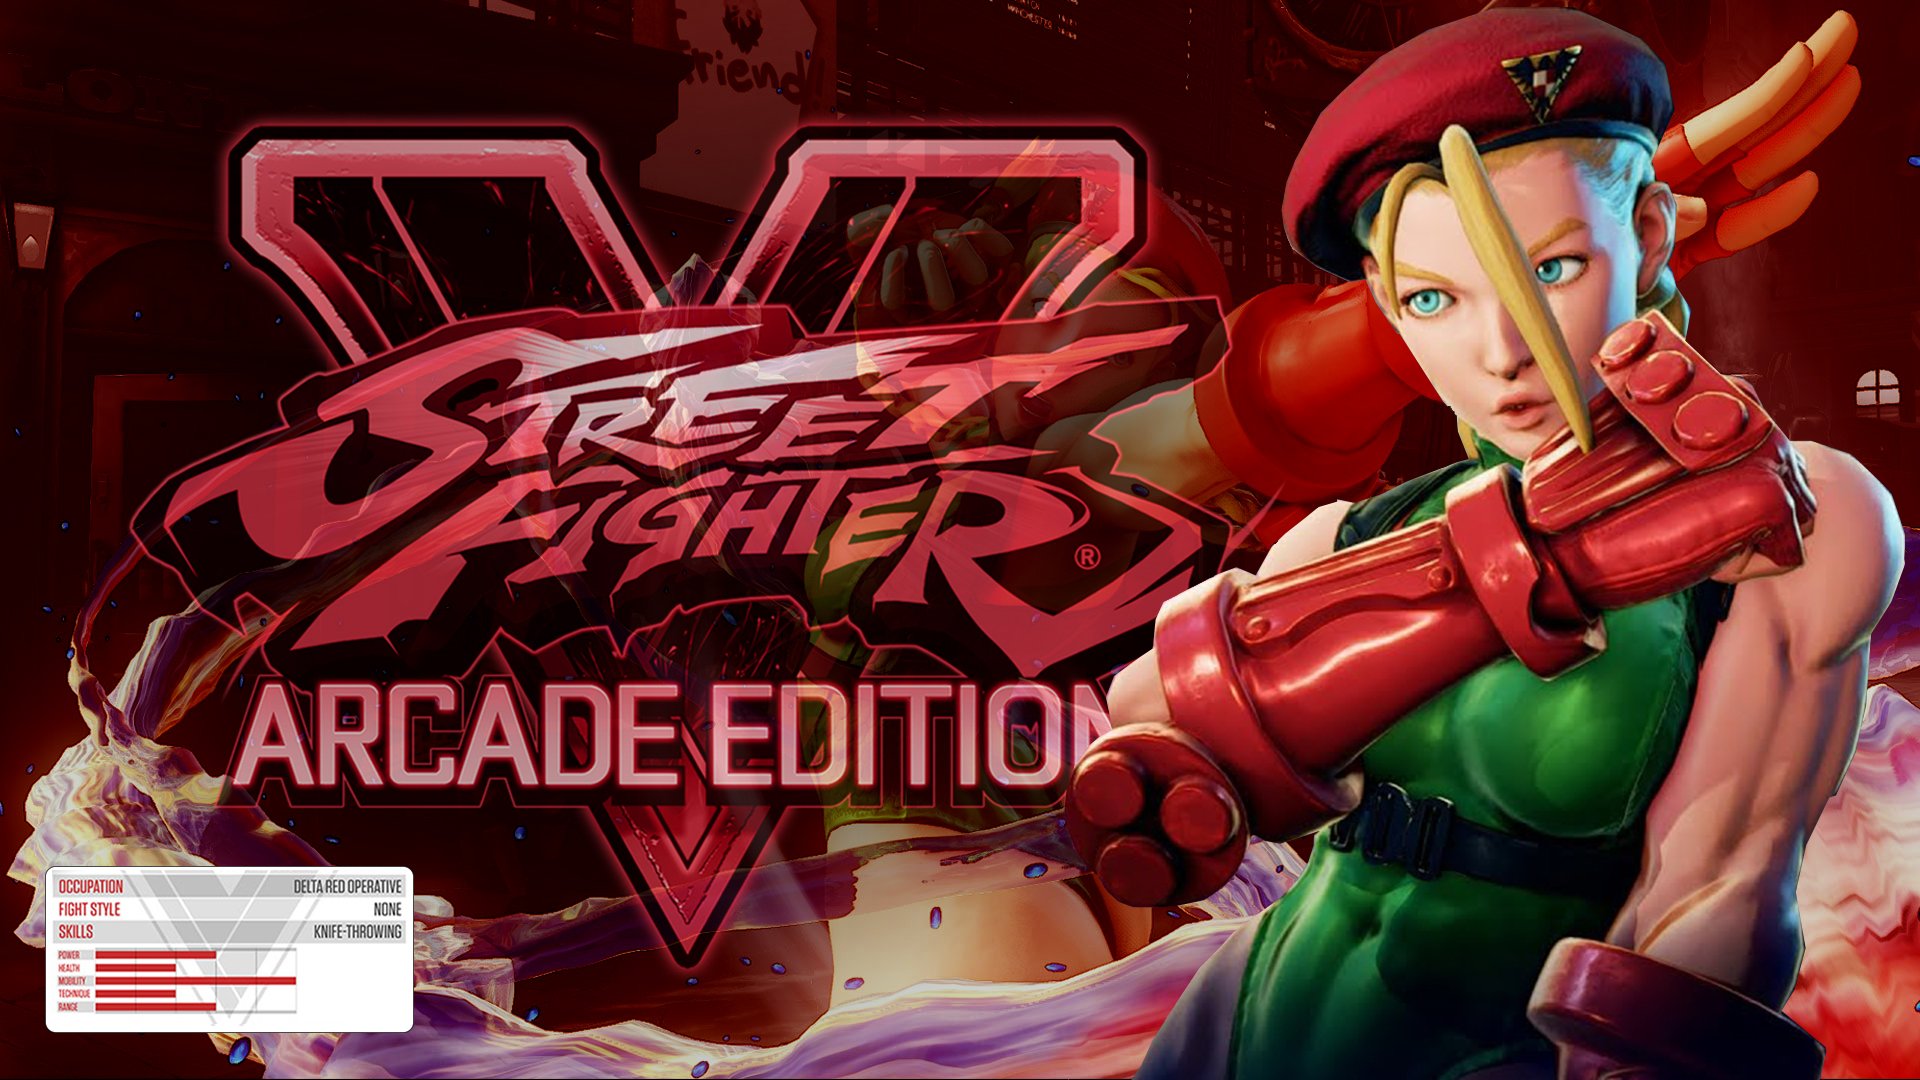 Cammy - Street Fighter V, Street Fifghter V, Super Street Fighter IV, Cammy,  HD wallpaper